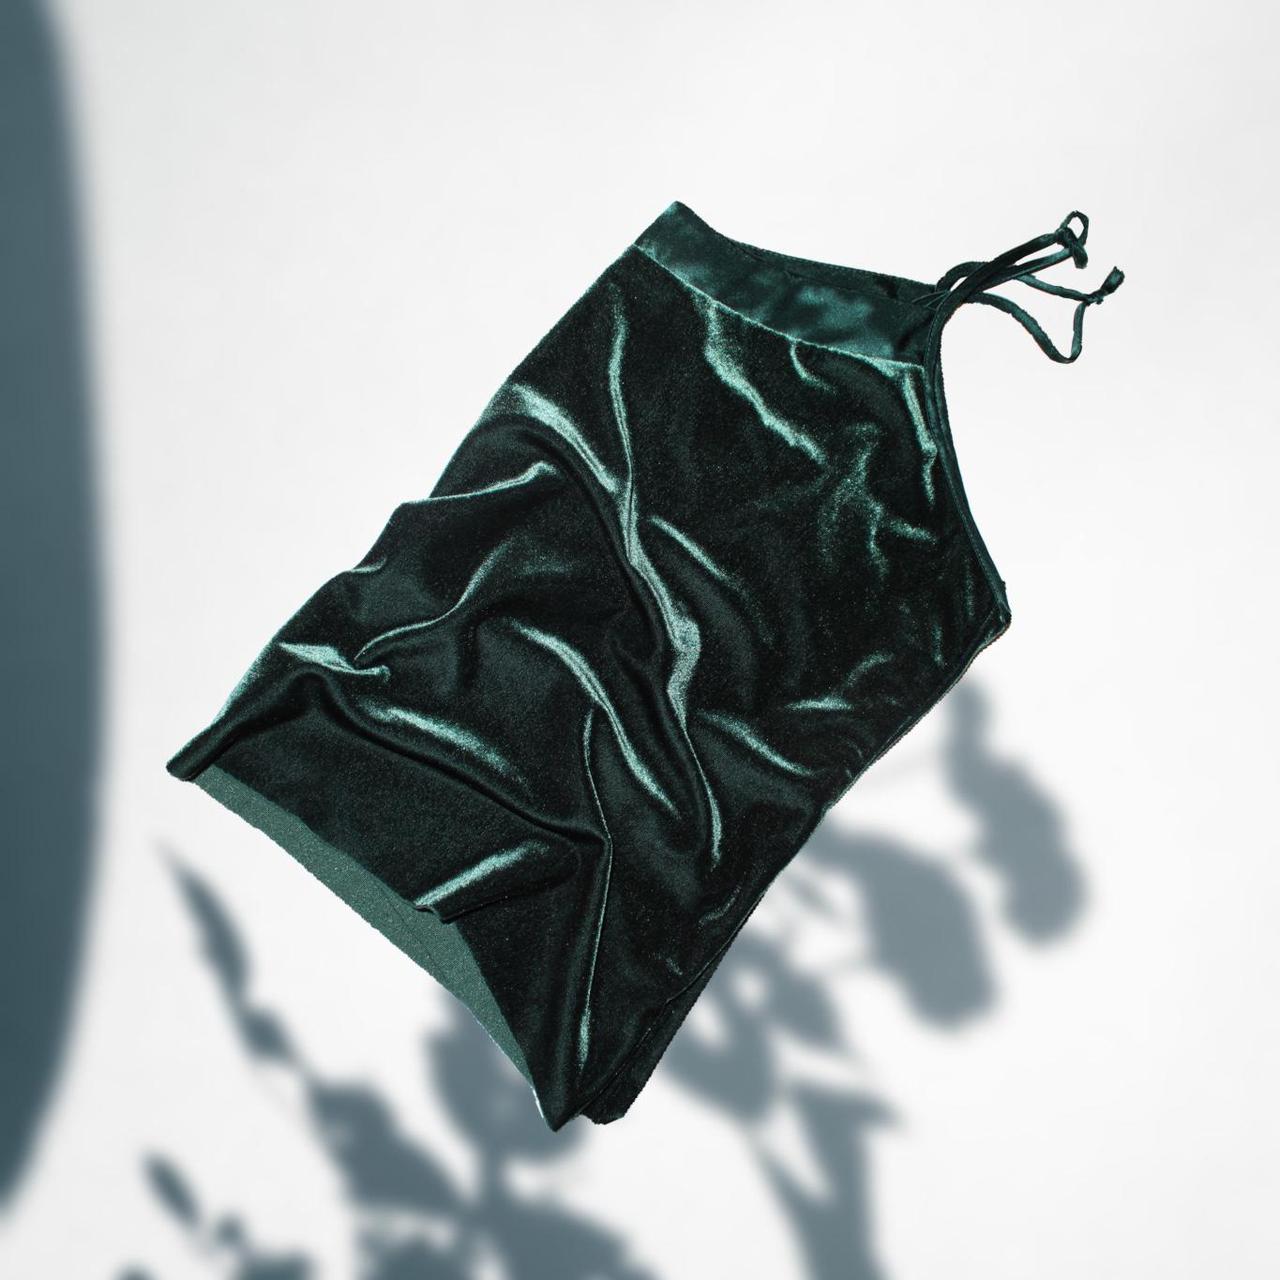 Product Image 2 - Green velvet top
Size medium ❣️
Ties